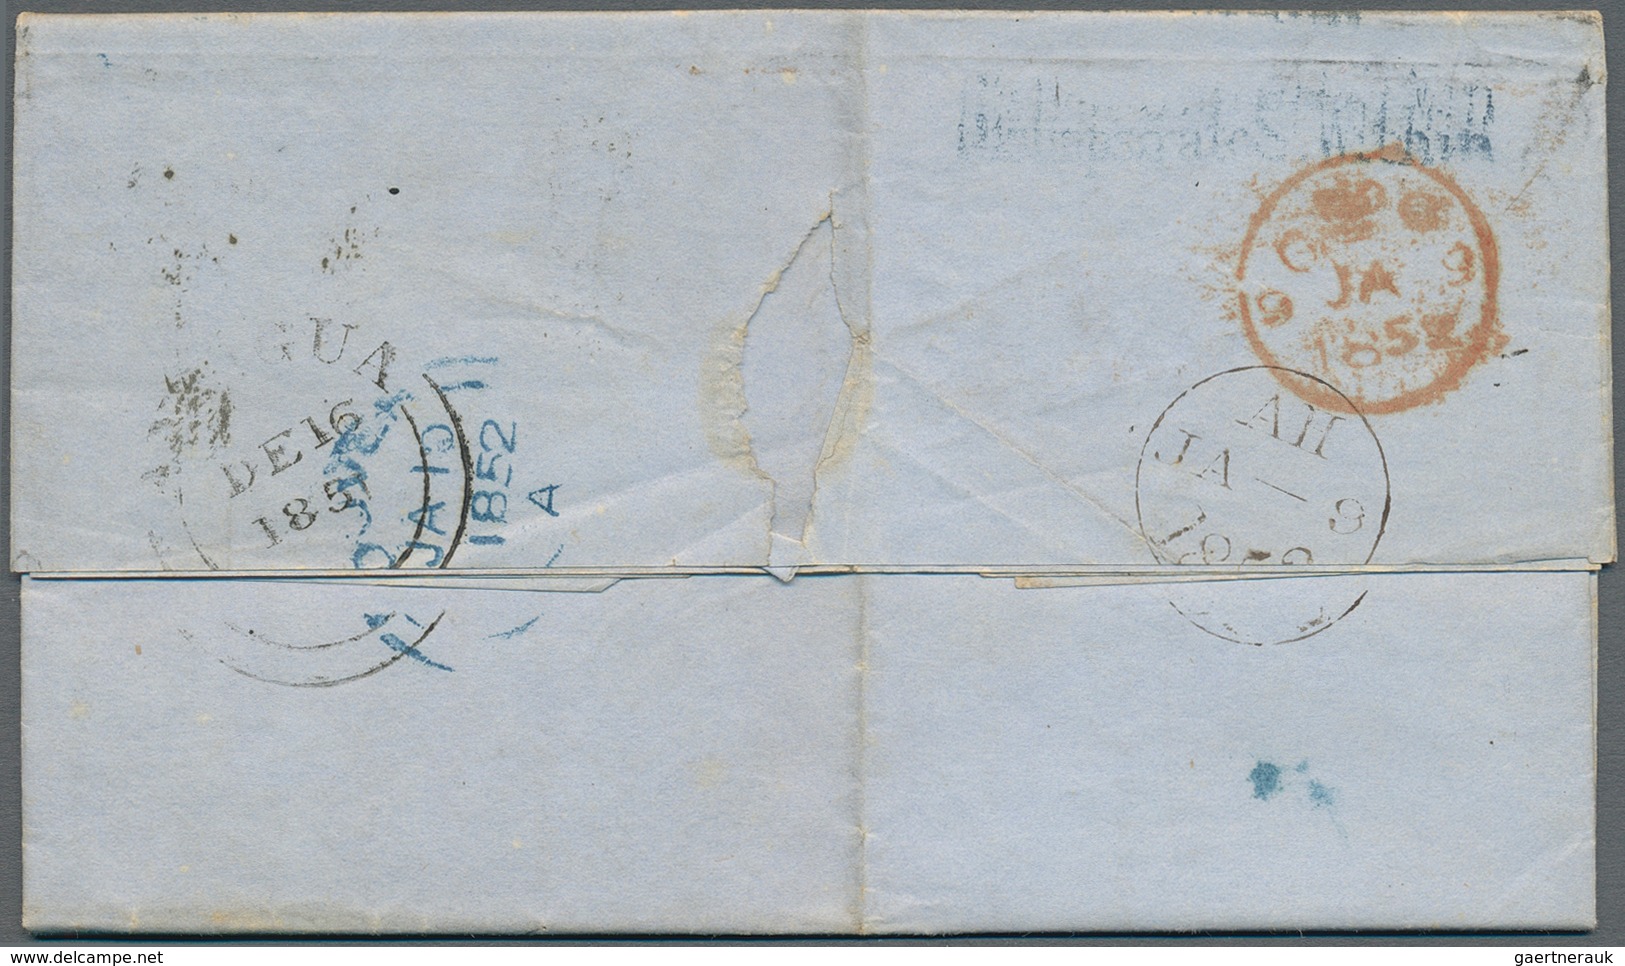 Antigua: 1851, Complete Entire Letter Sent From "ANTIQUA DE 16 1851" To London With Arrival 8.1.52, - Antigua En Barbuda (1981-...)